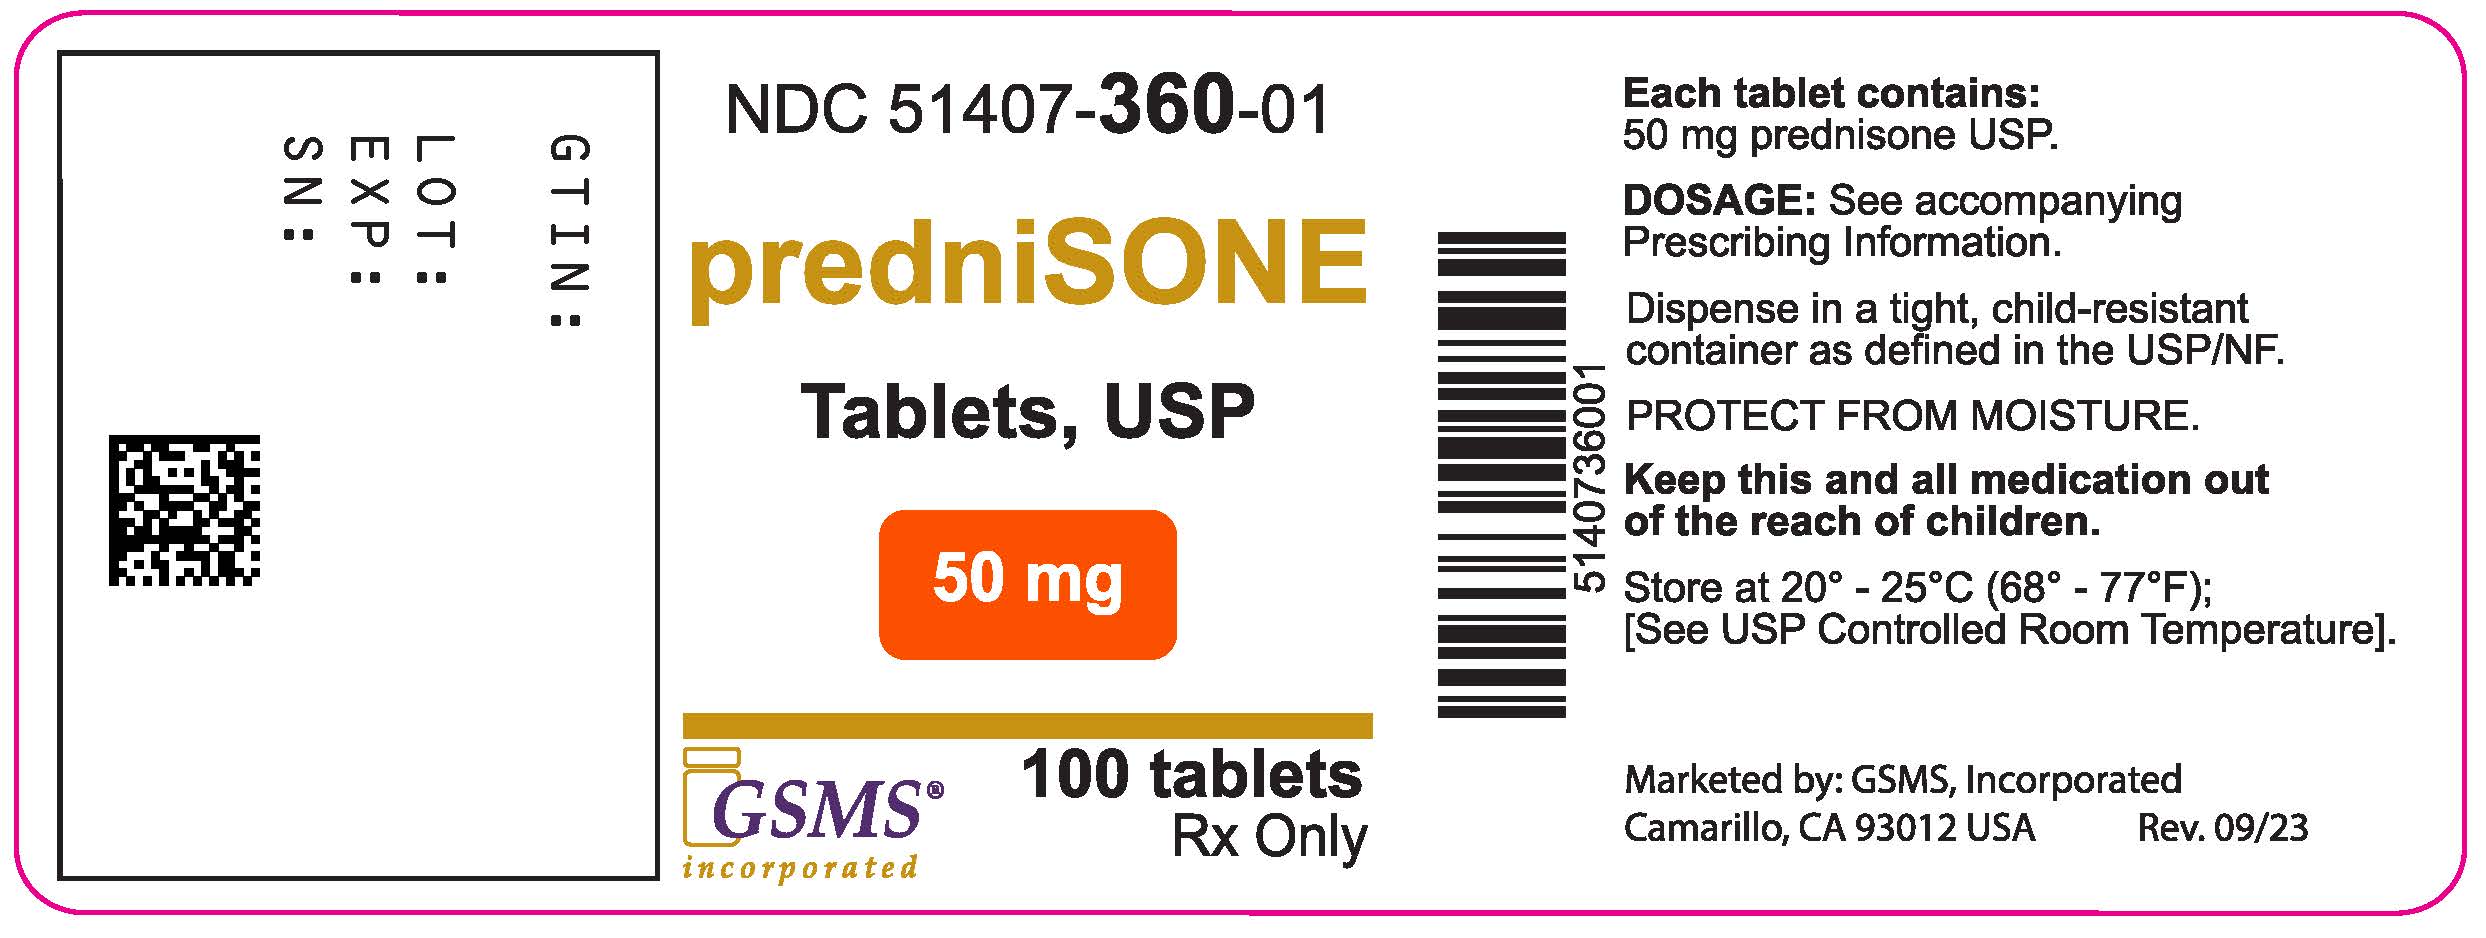 51407-360-01LB - Prednisone Tablets - Rev. 0923.jpg